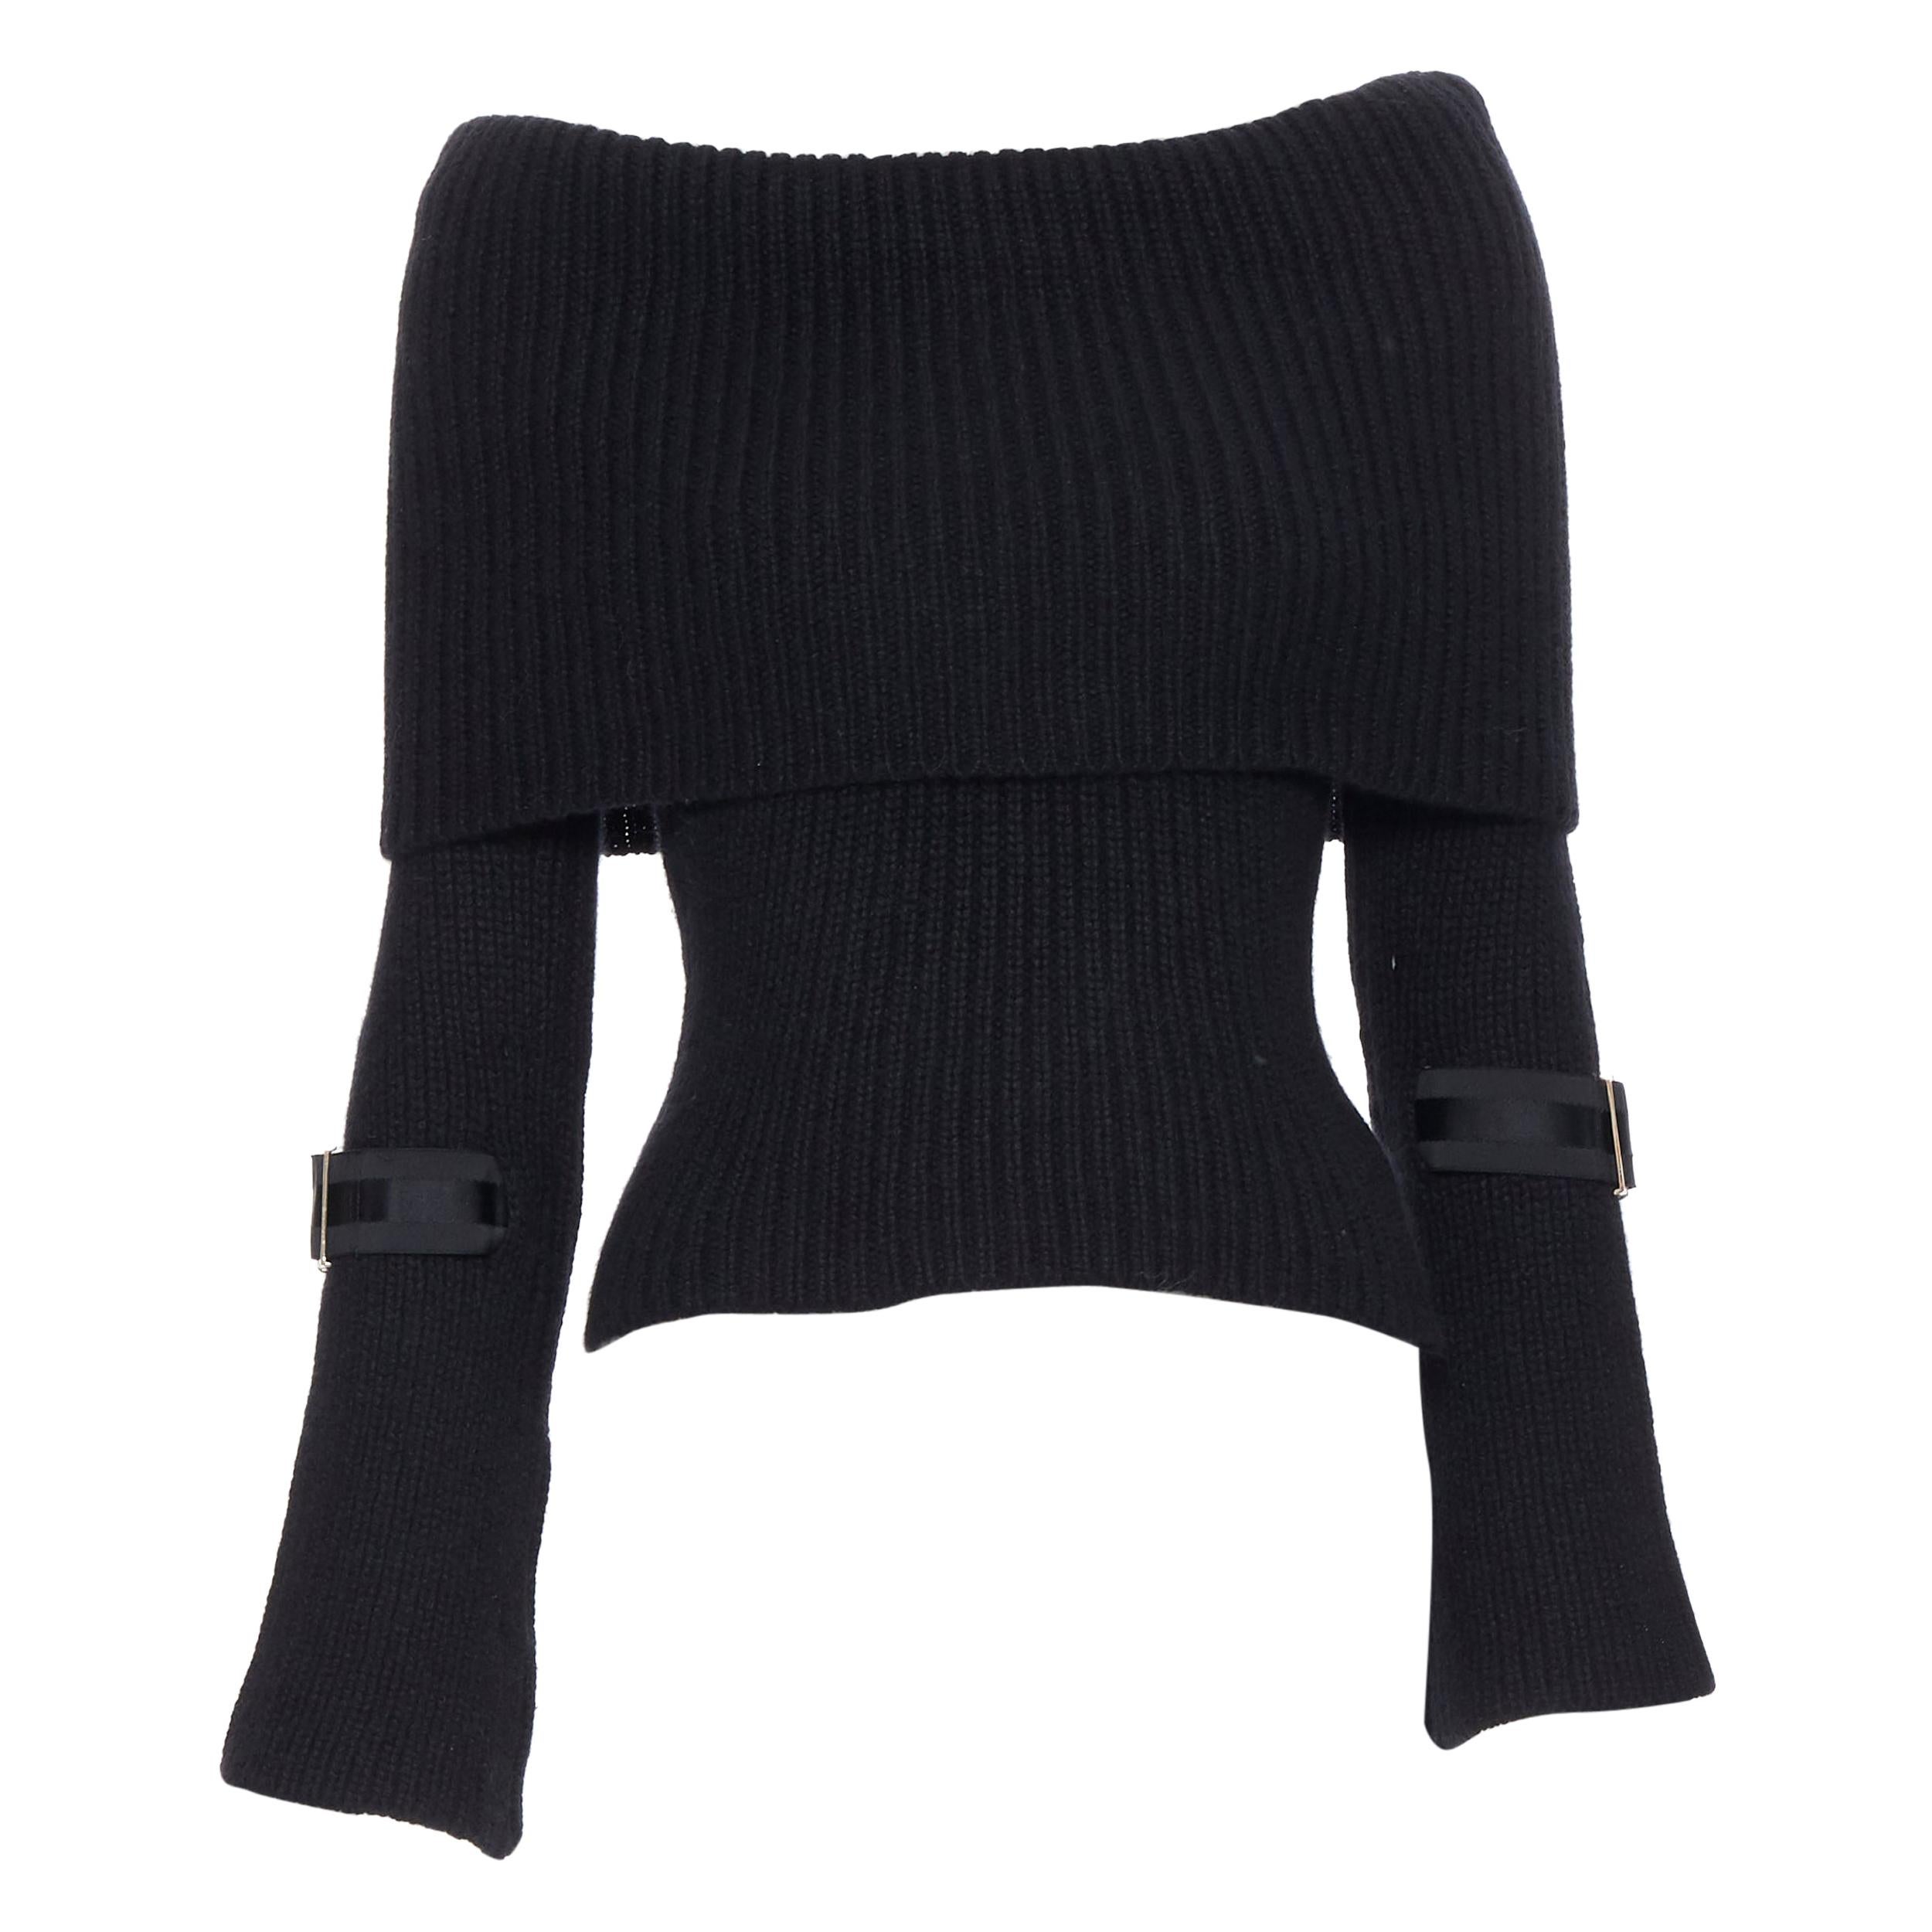 GUCCI 100% cashmere black foldover off shoulder web buckle cuff sweater XS